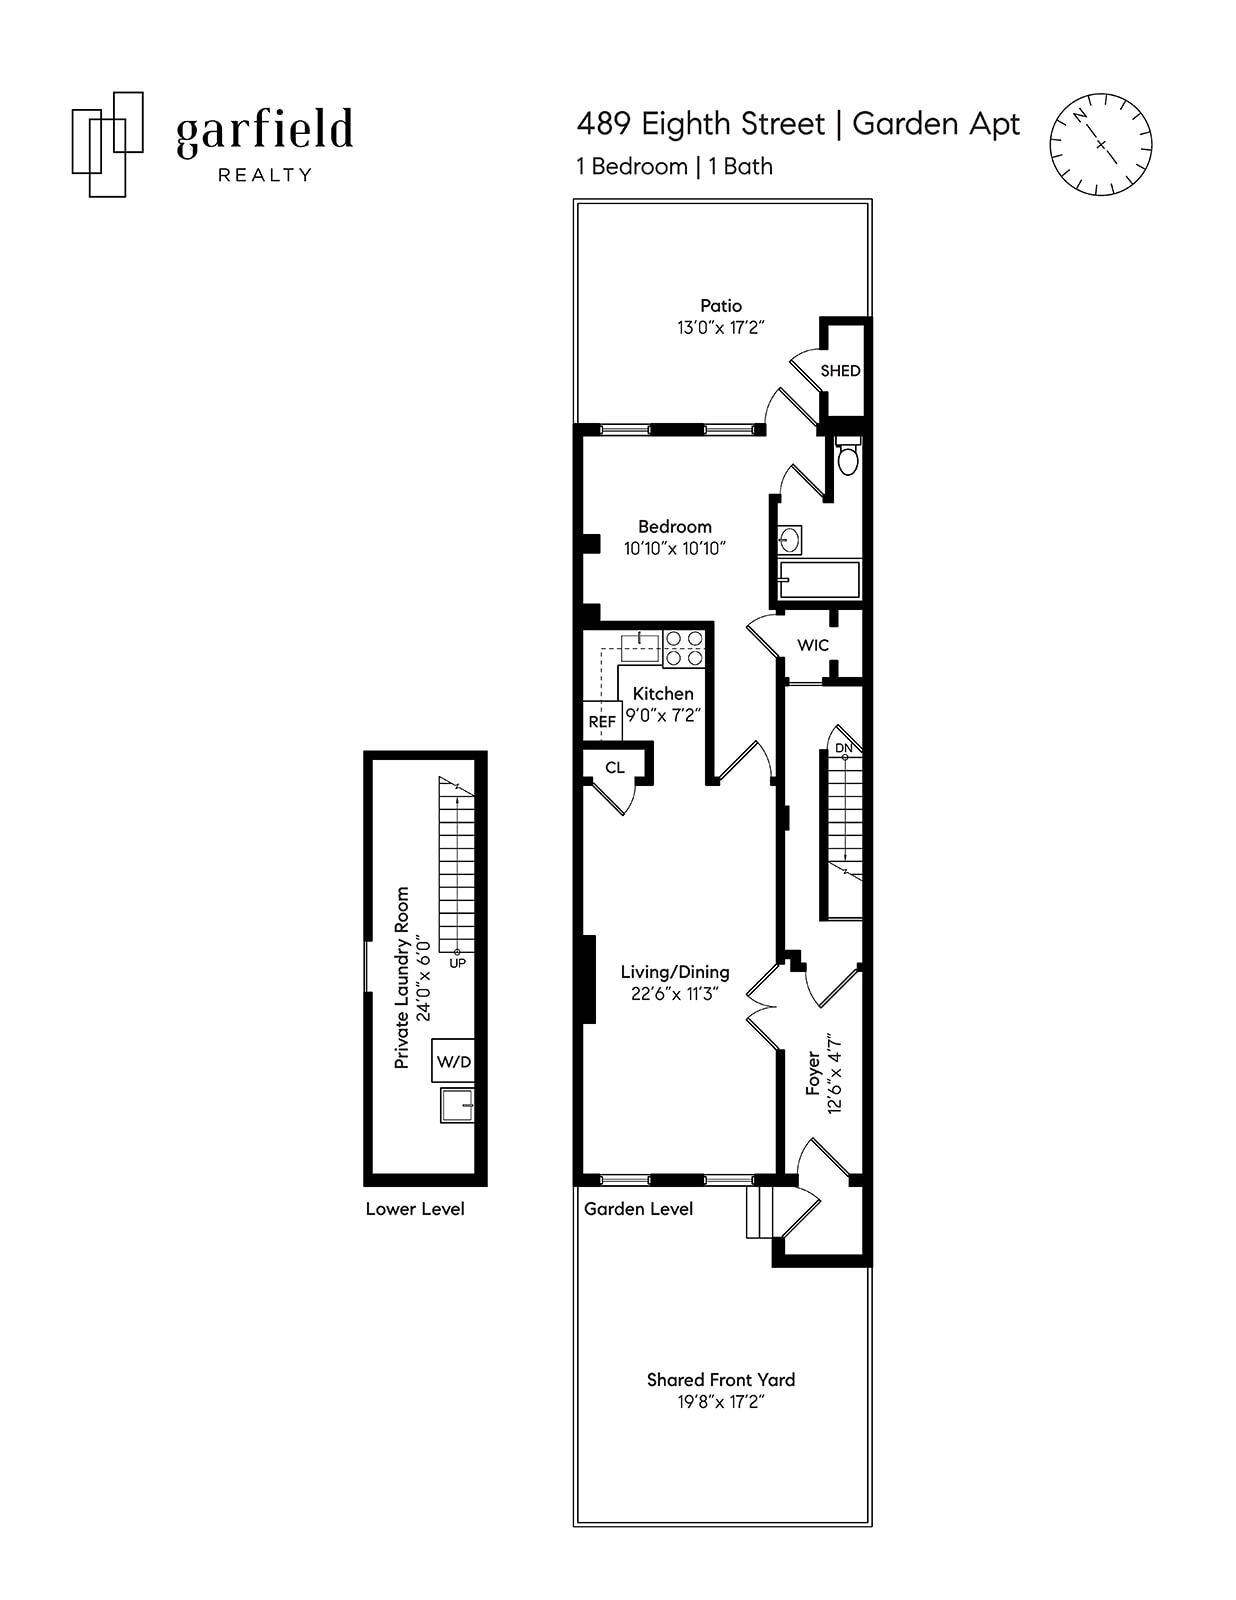 Floorplan of 489 8th St